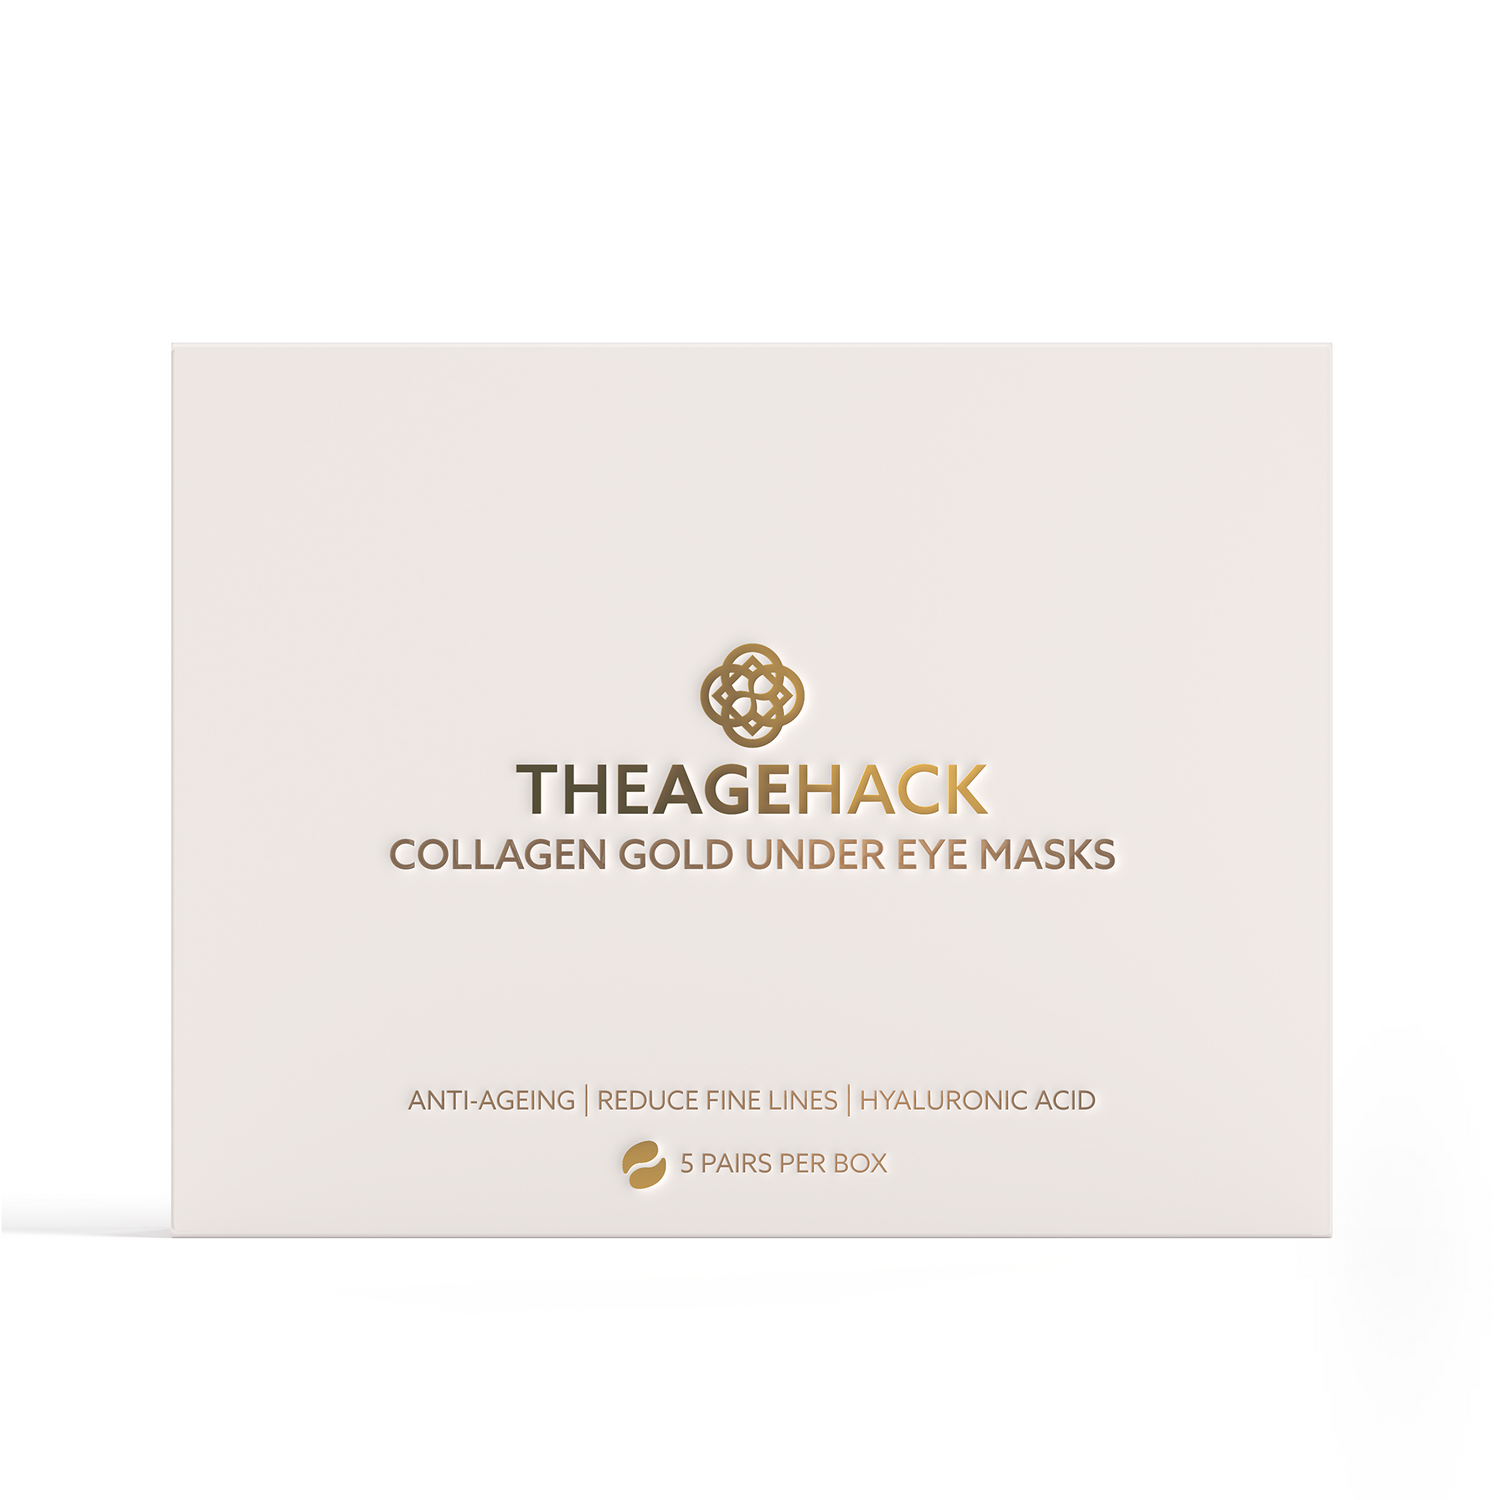 THEAGEHACK Collagen Under Gold Eye Mask - Front Label